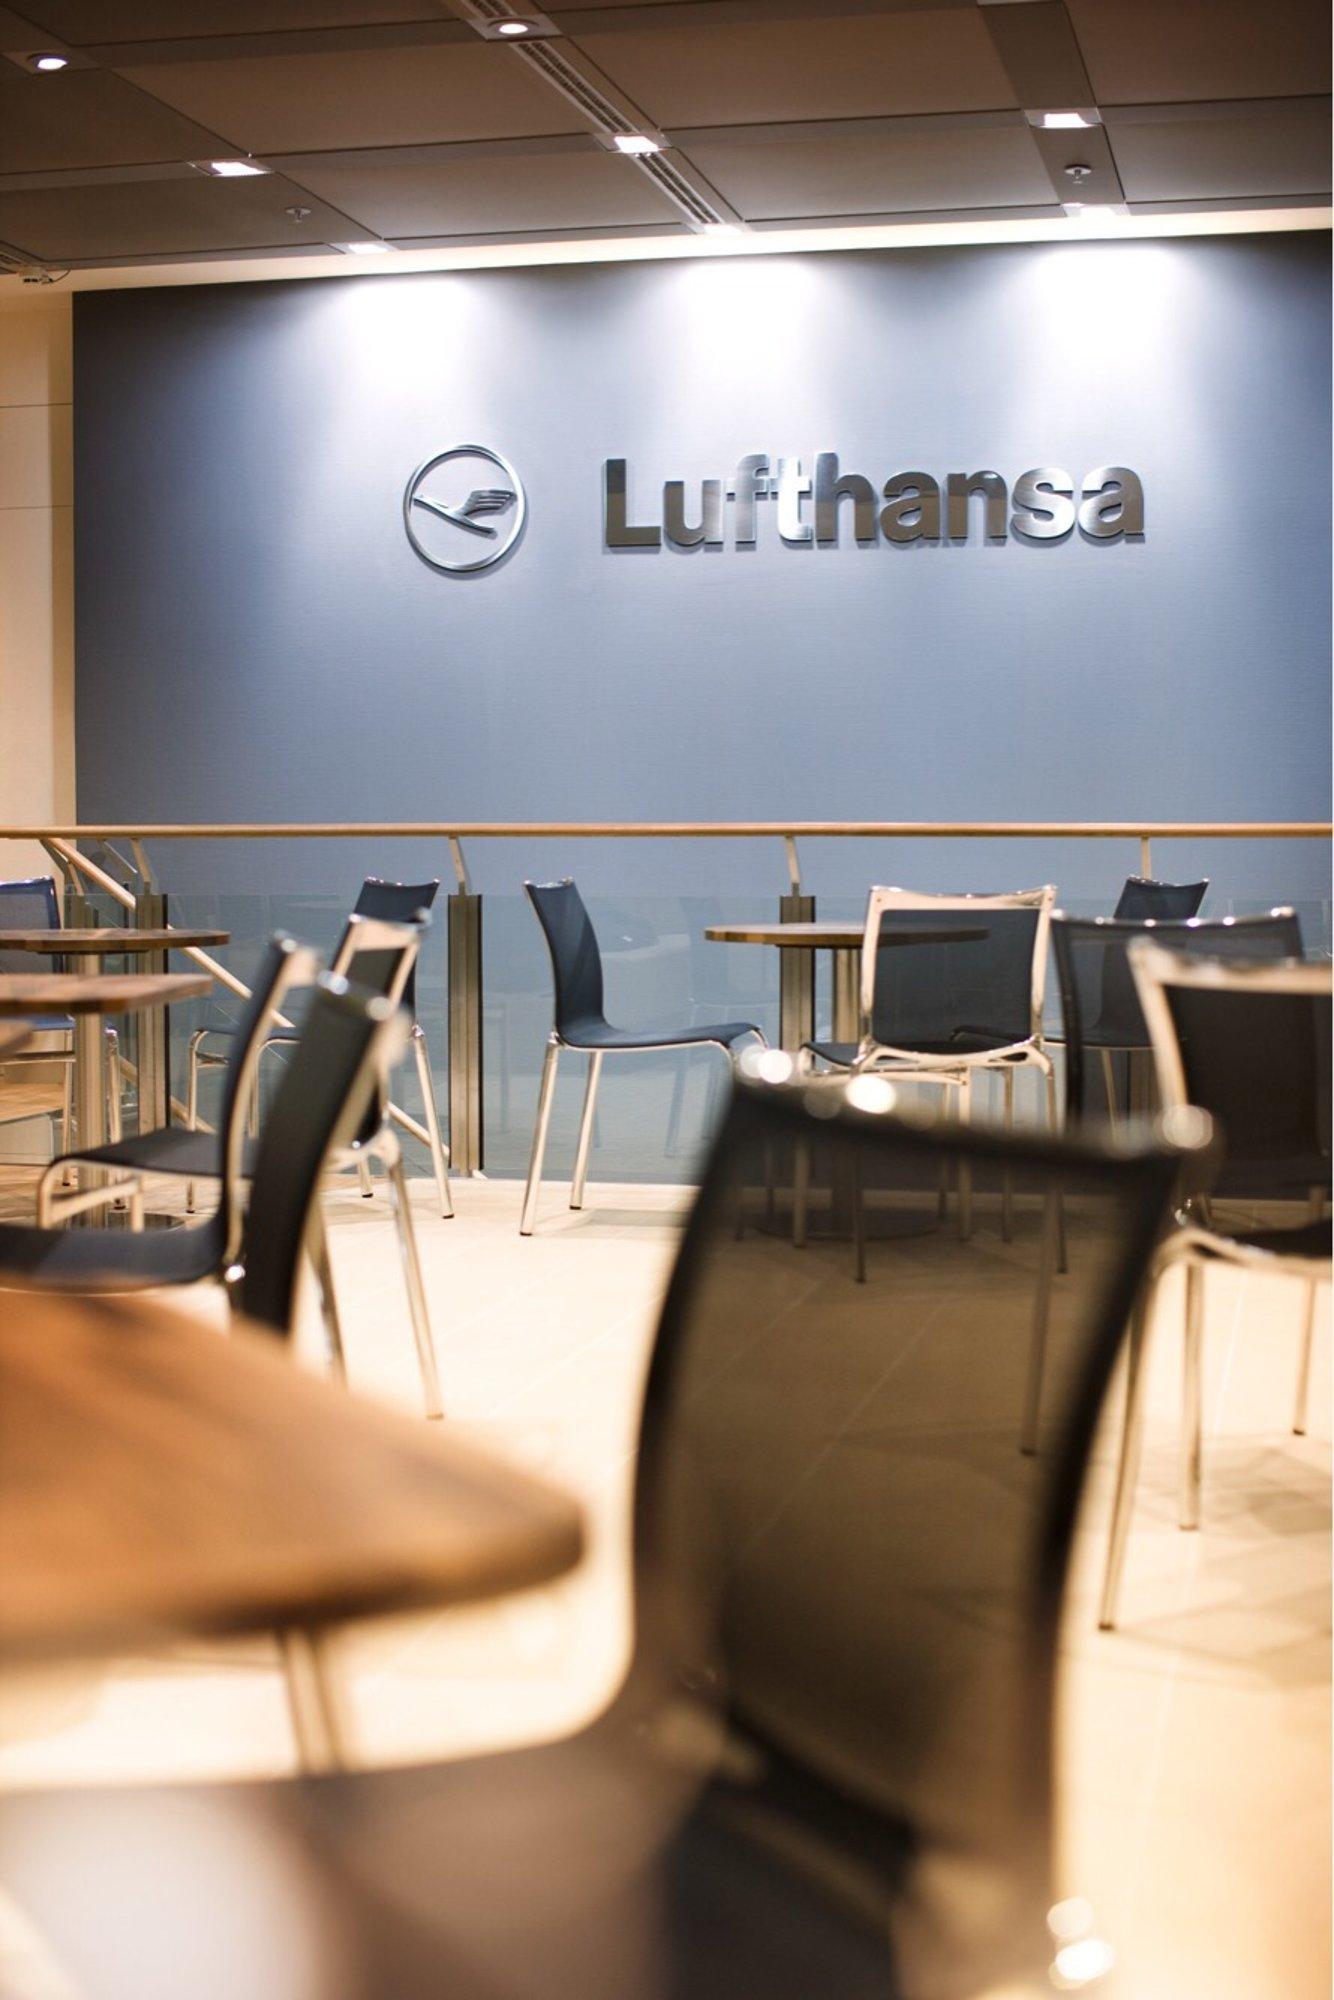 Lufthansa Welcome Lounge image 3 of 14